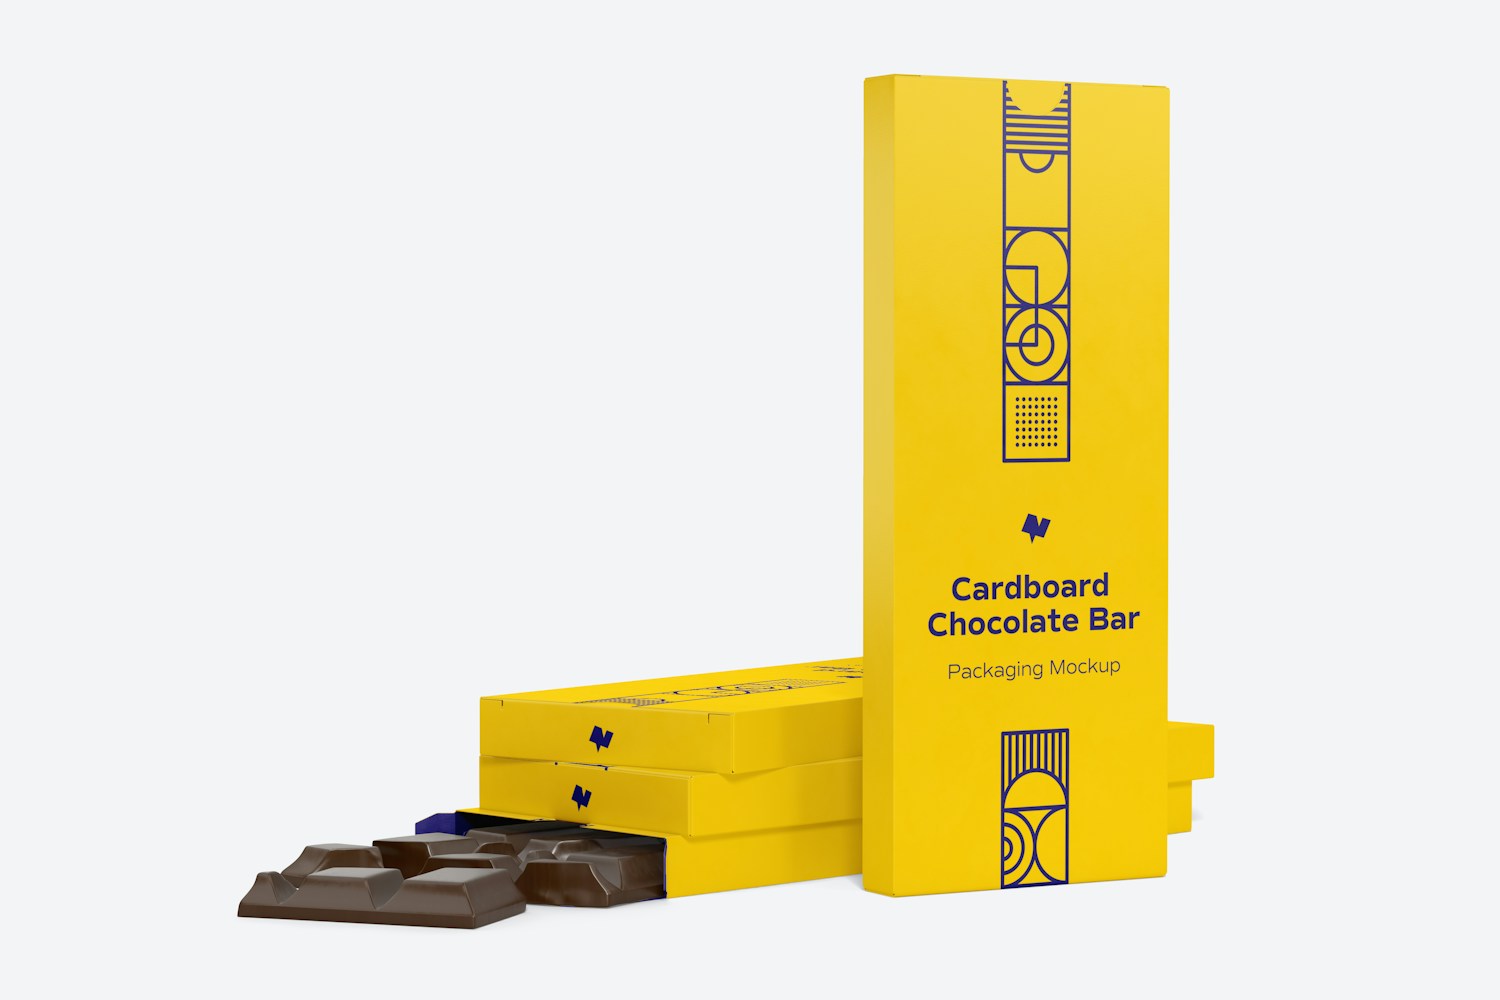 Cardboard Chocolate Bar Packaging Mockup, Right View